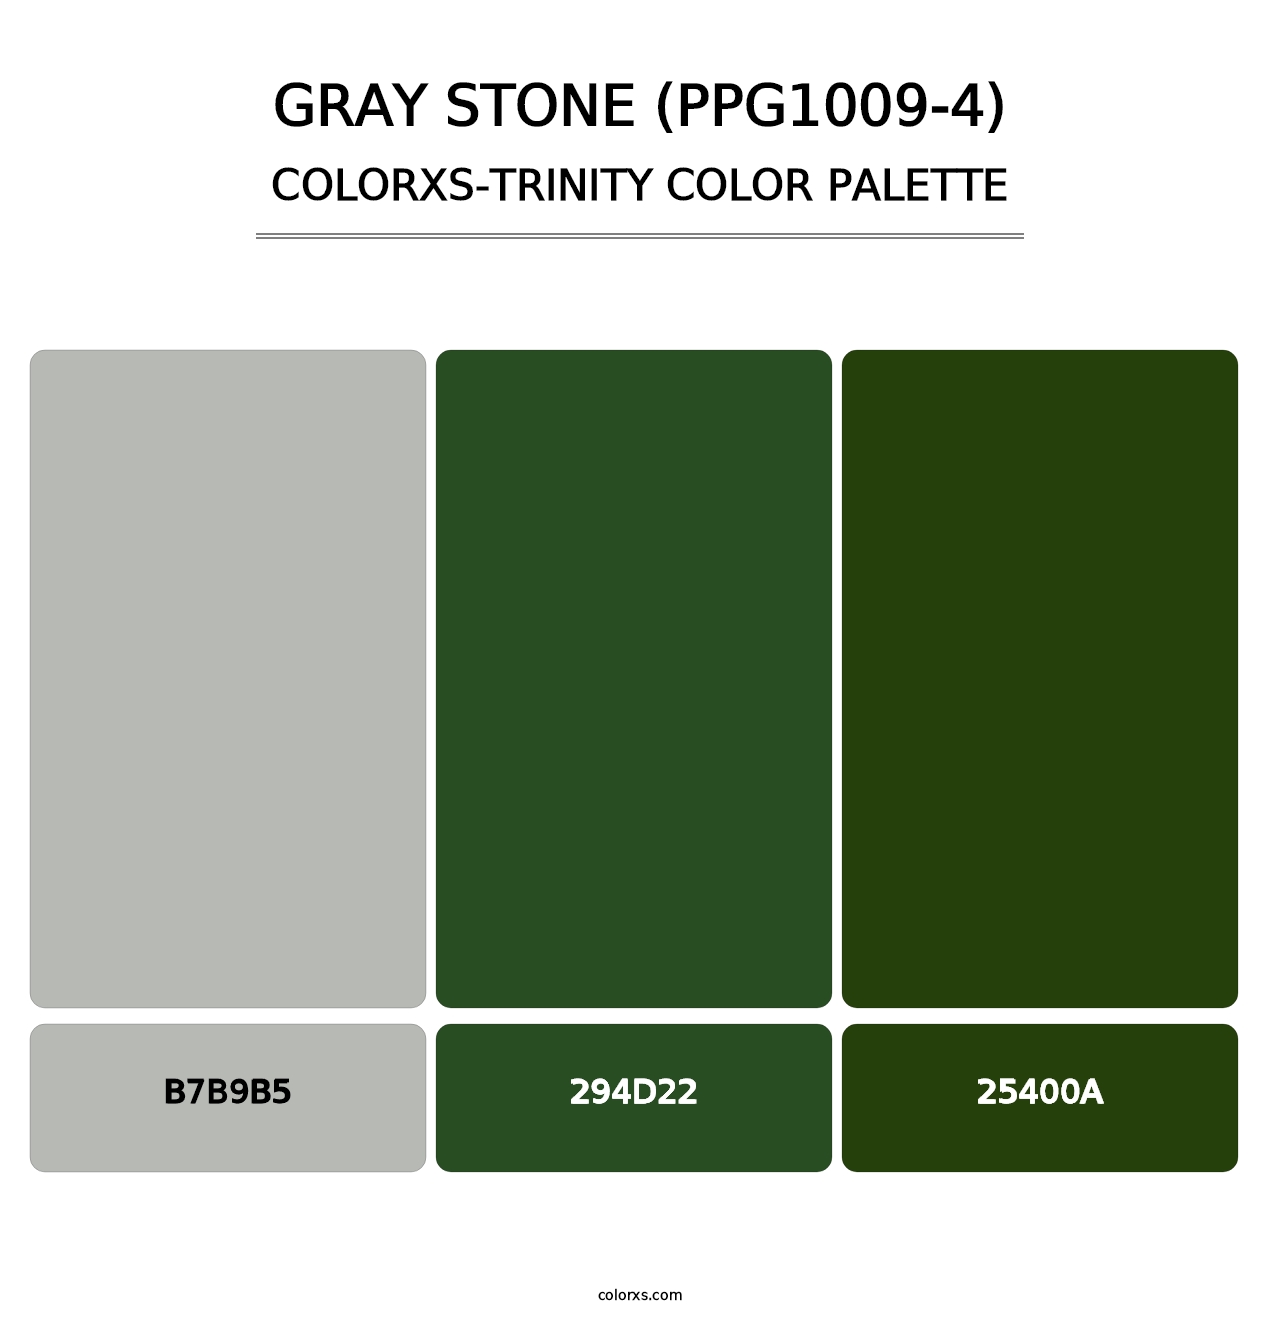 Gray Stone (PPG1009-4) - Colorxs Trinity Palette